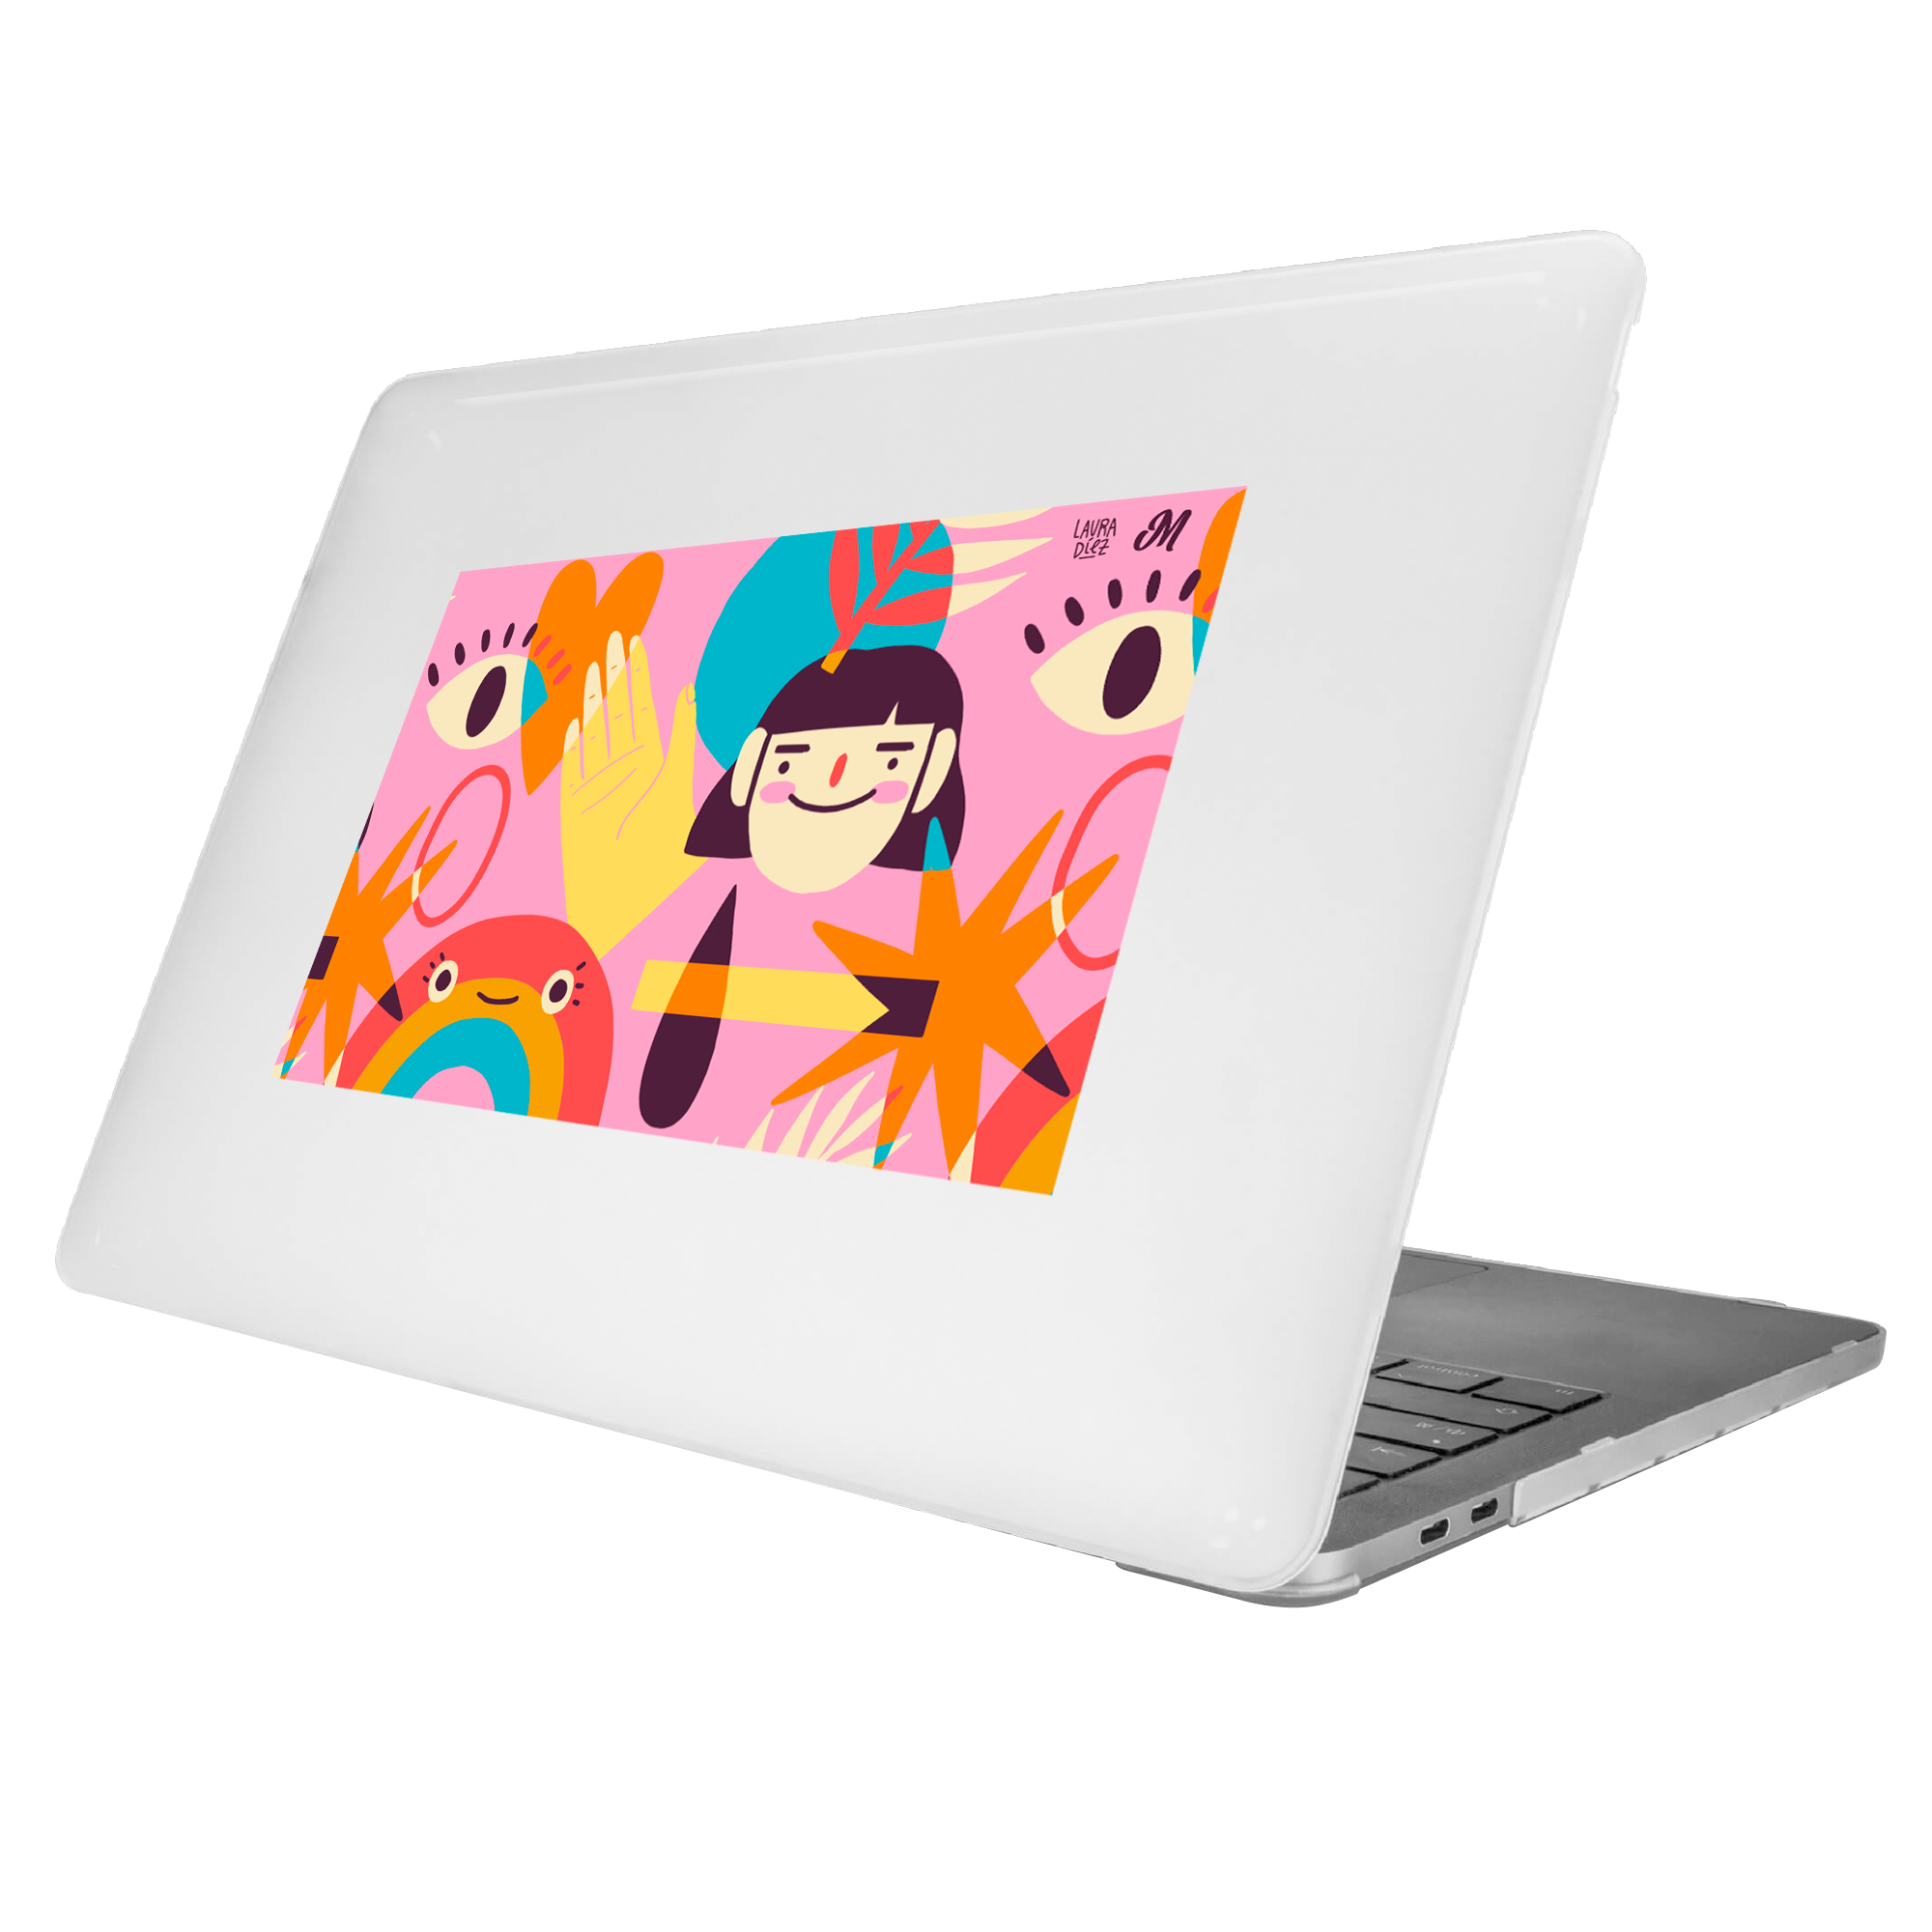 Sueños Arcoiris MacBook Case - Mandala Cases